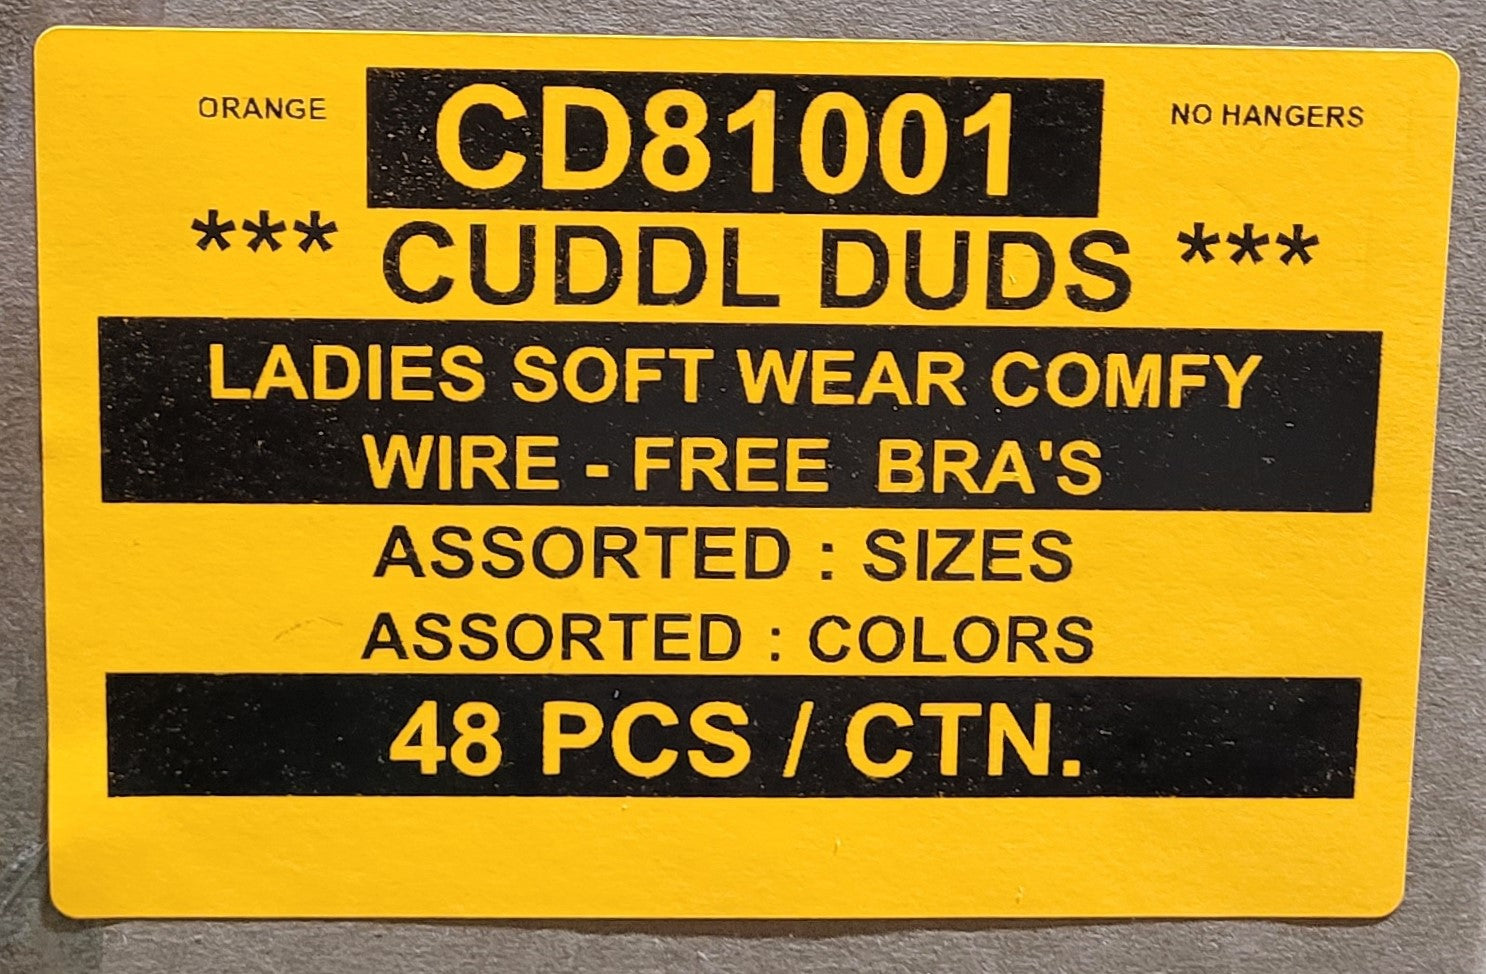 CUDDL DUDS LADIES SOFT WEAR COMFY WIRE-FREE BRAS STYLE CD81001